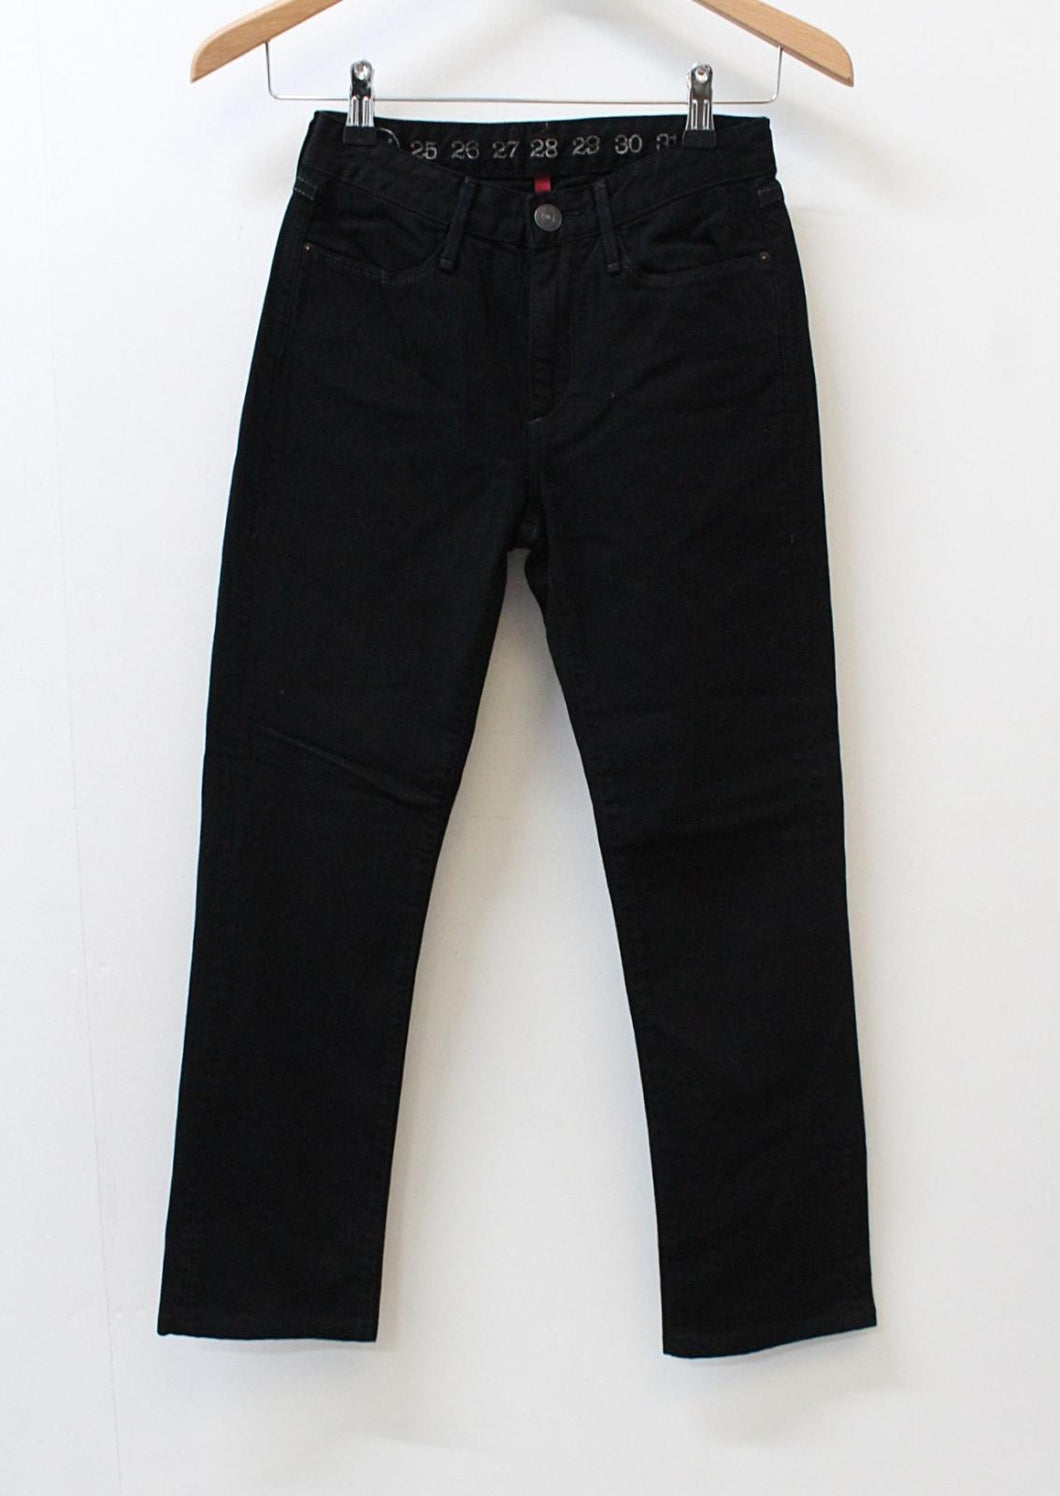 EARNEST SEWN Ladies Zazo Black Zip Fly Stretch Cotton Blend Denim Jeans W24 L25